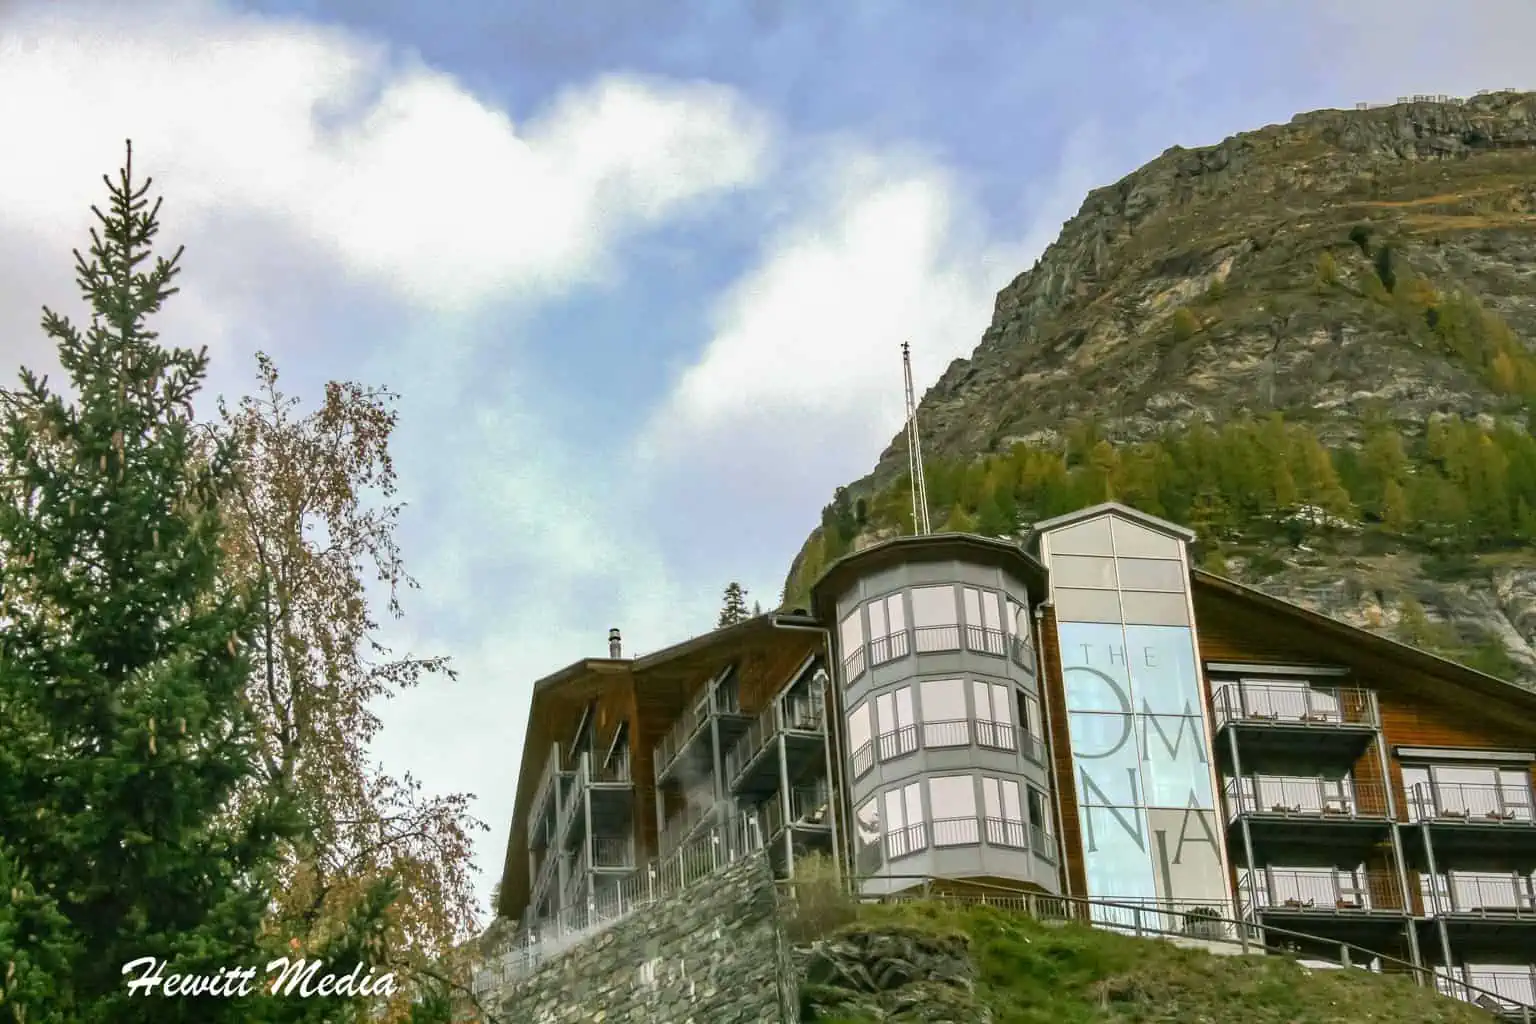 Omnia Hotel in Zermatt